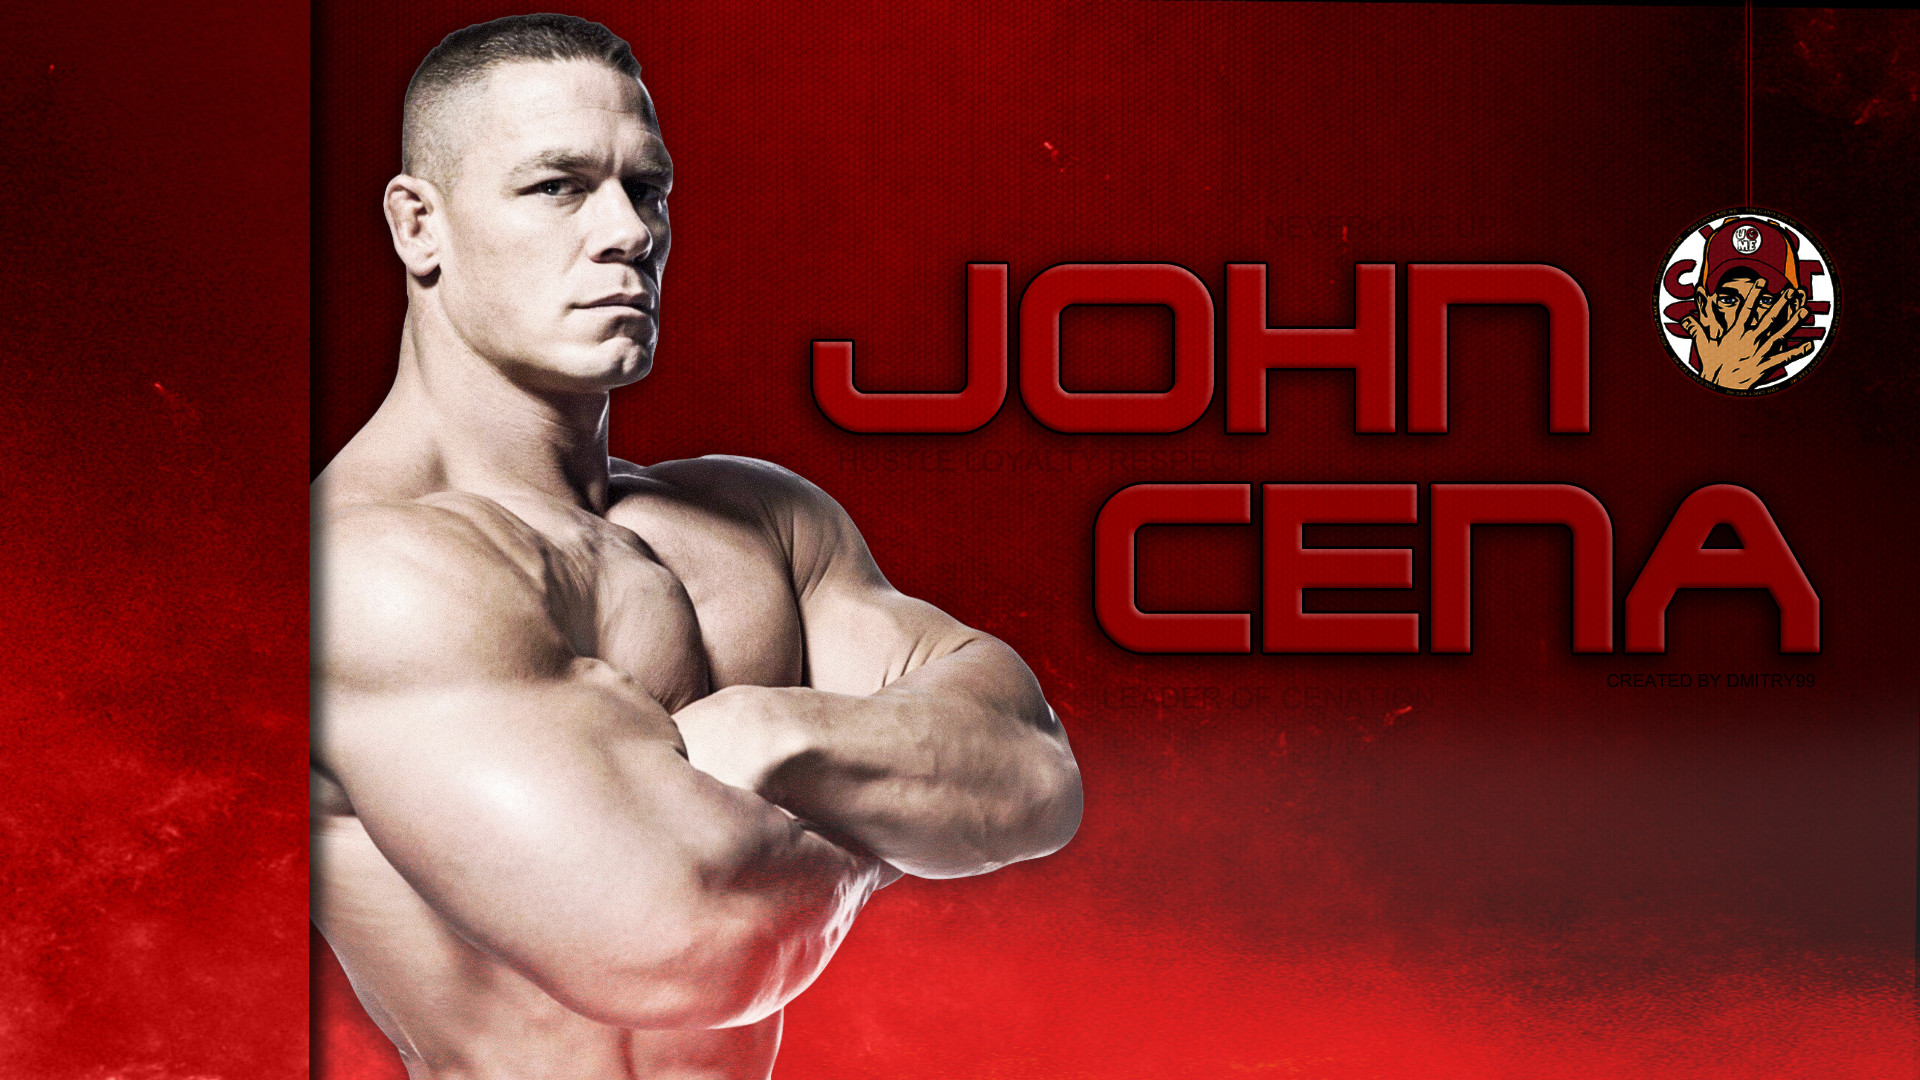 Jhon Cena HD Wallpaper With Quote John